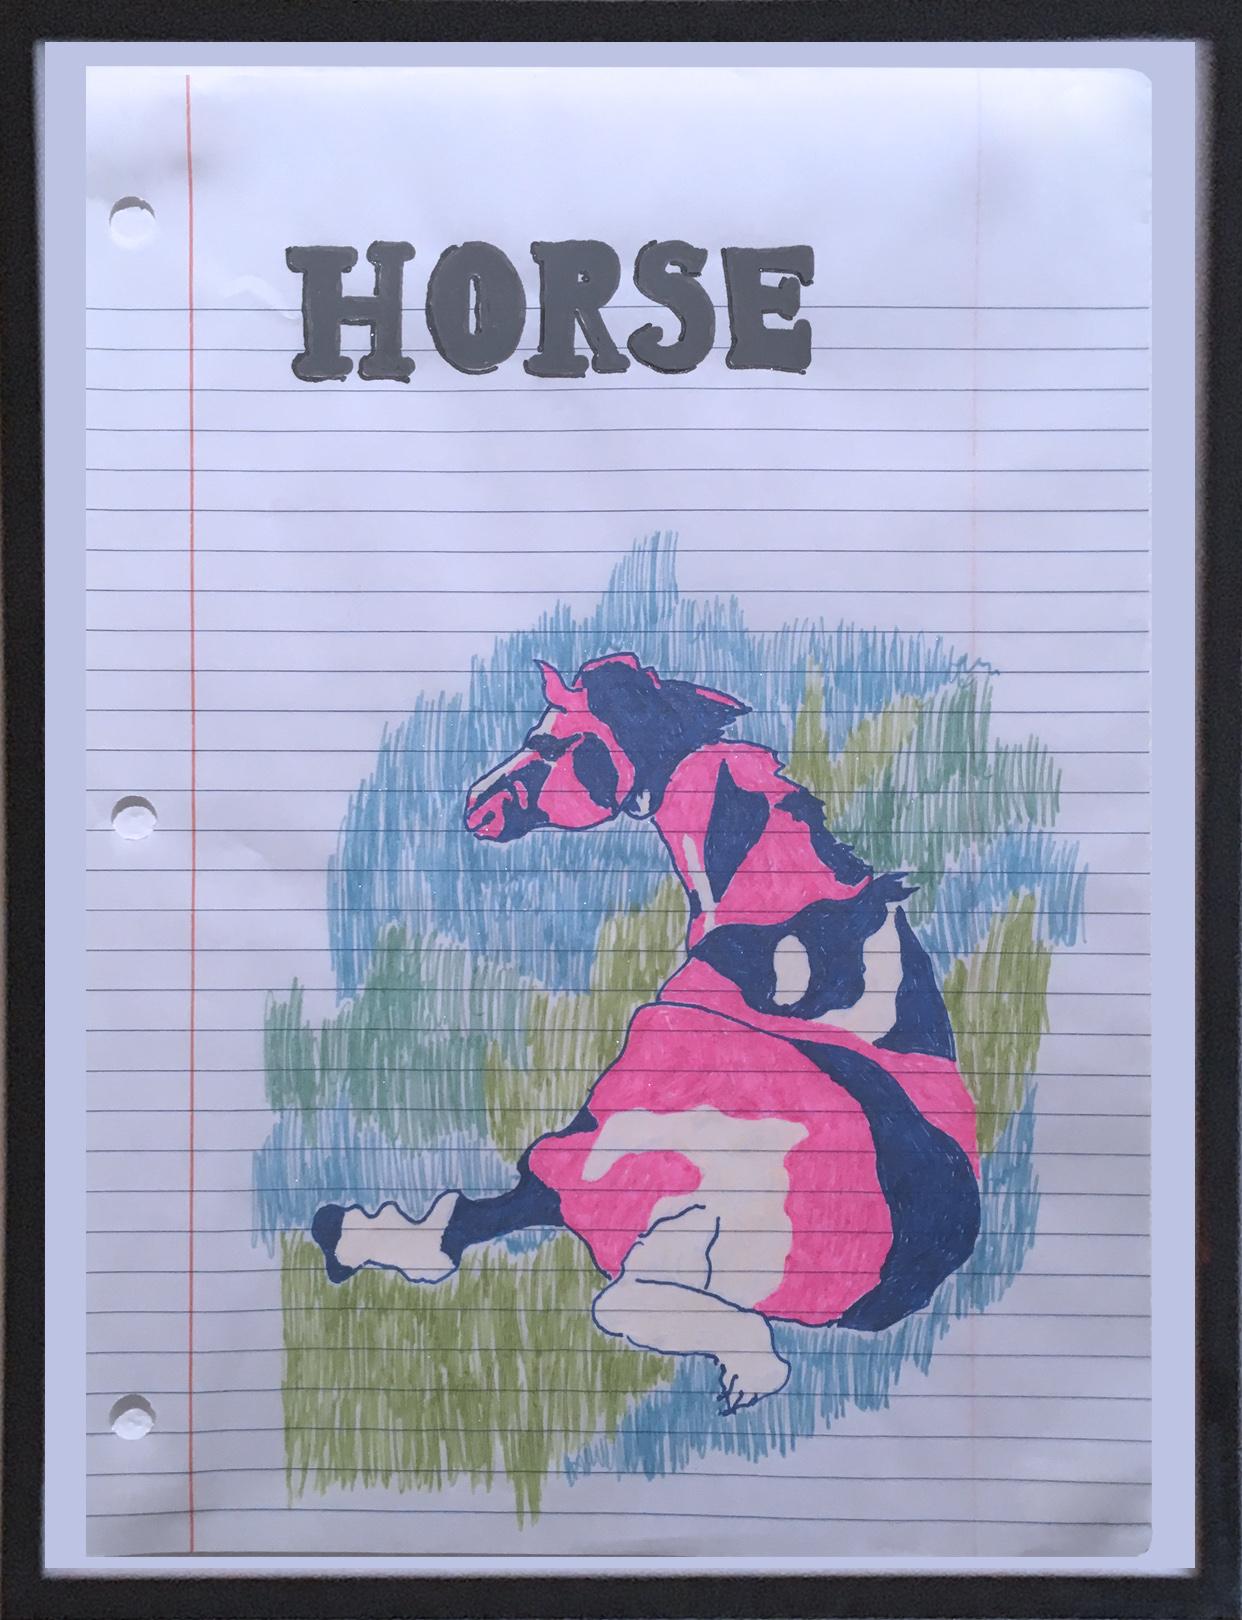 Macauley Norman Figurative Art - Horse, 2020, gel pen on paper, figurative, drawing, framed, pink, blue, white